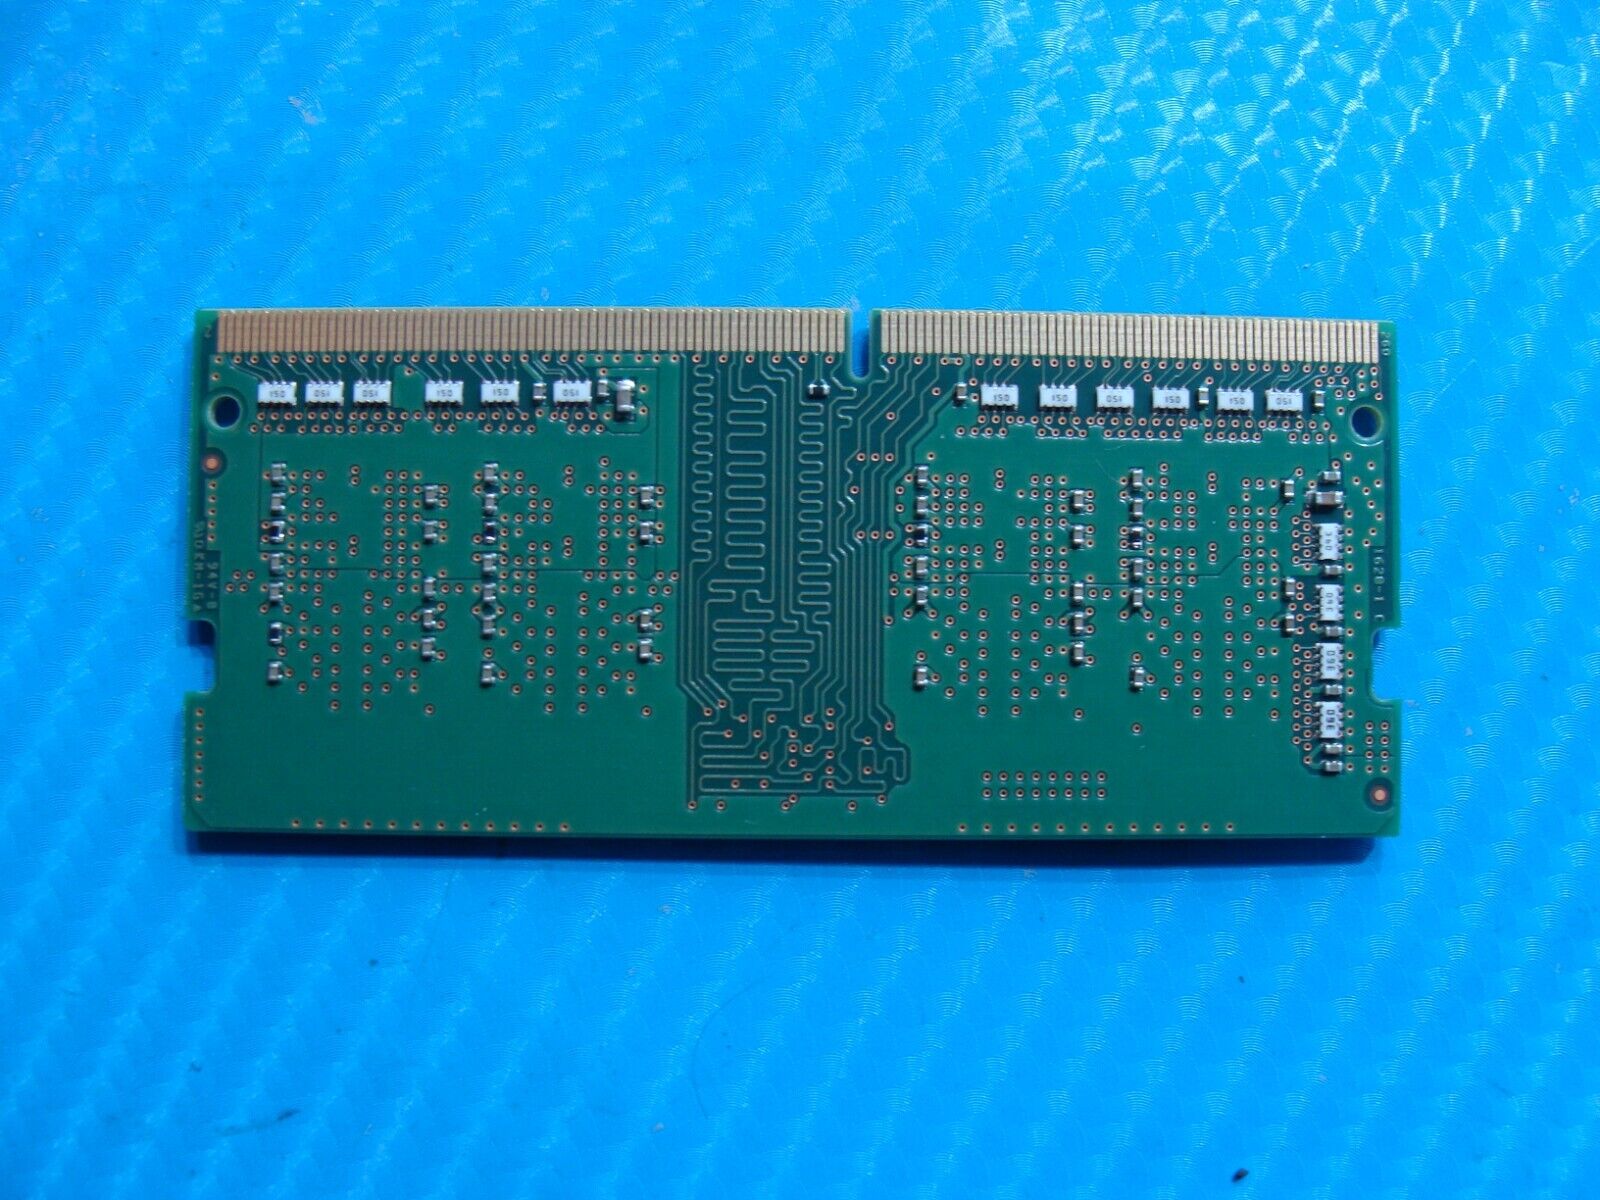 HP M3-U001DX SK hynix 2GB 1Rx16 PC4-2133P Memory RAM SO-DIMM HMA425S6AFR6N-TF